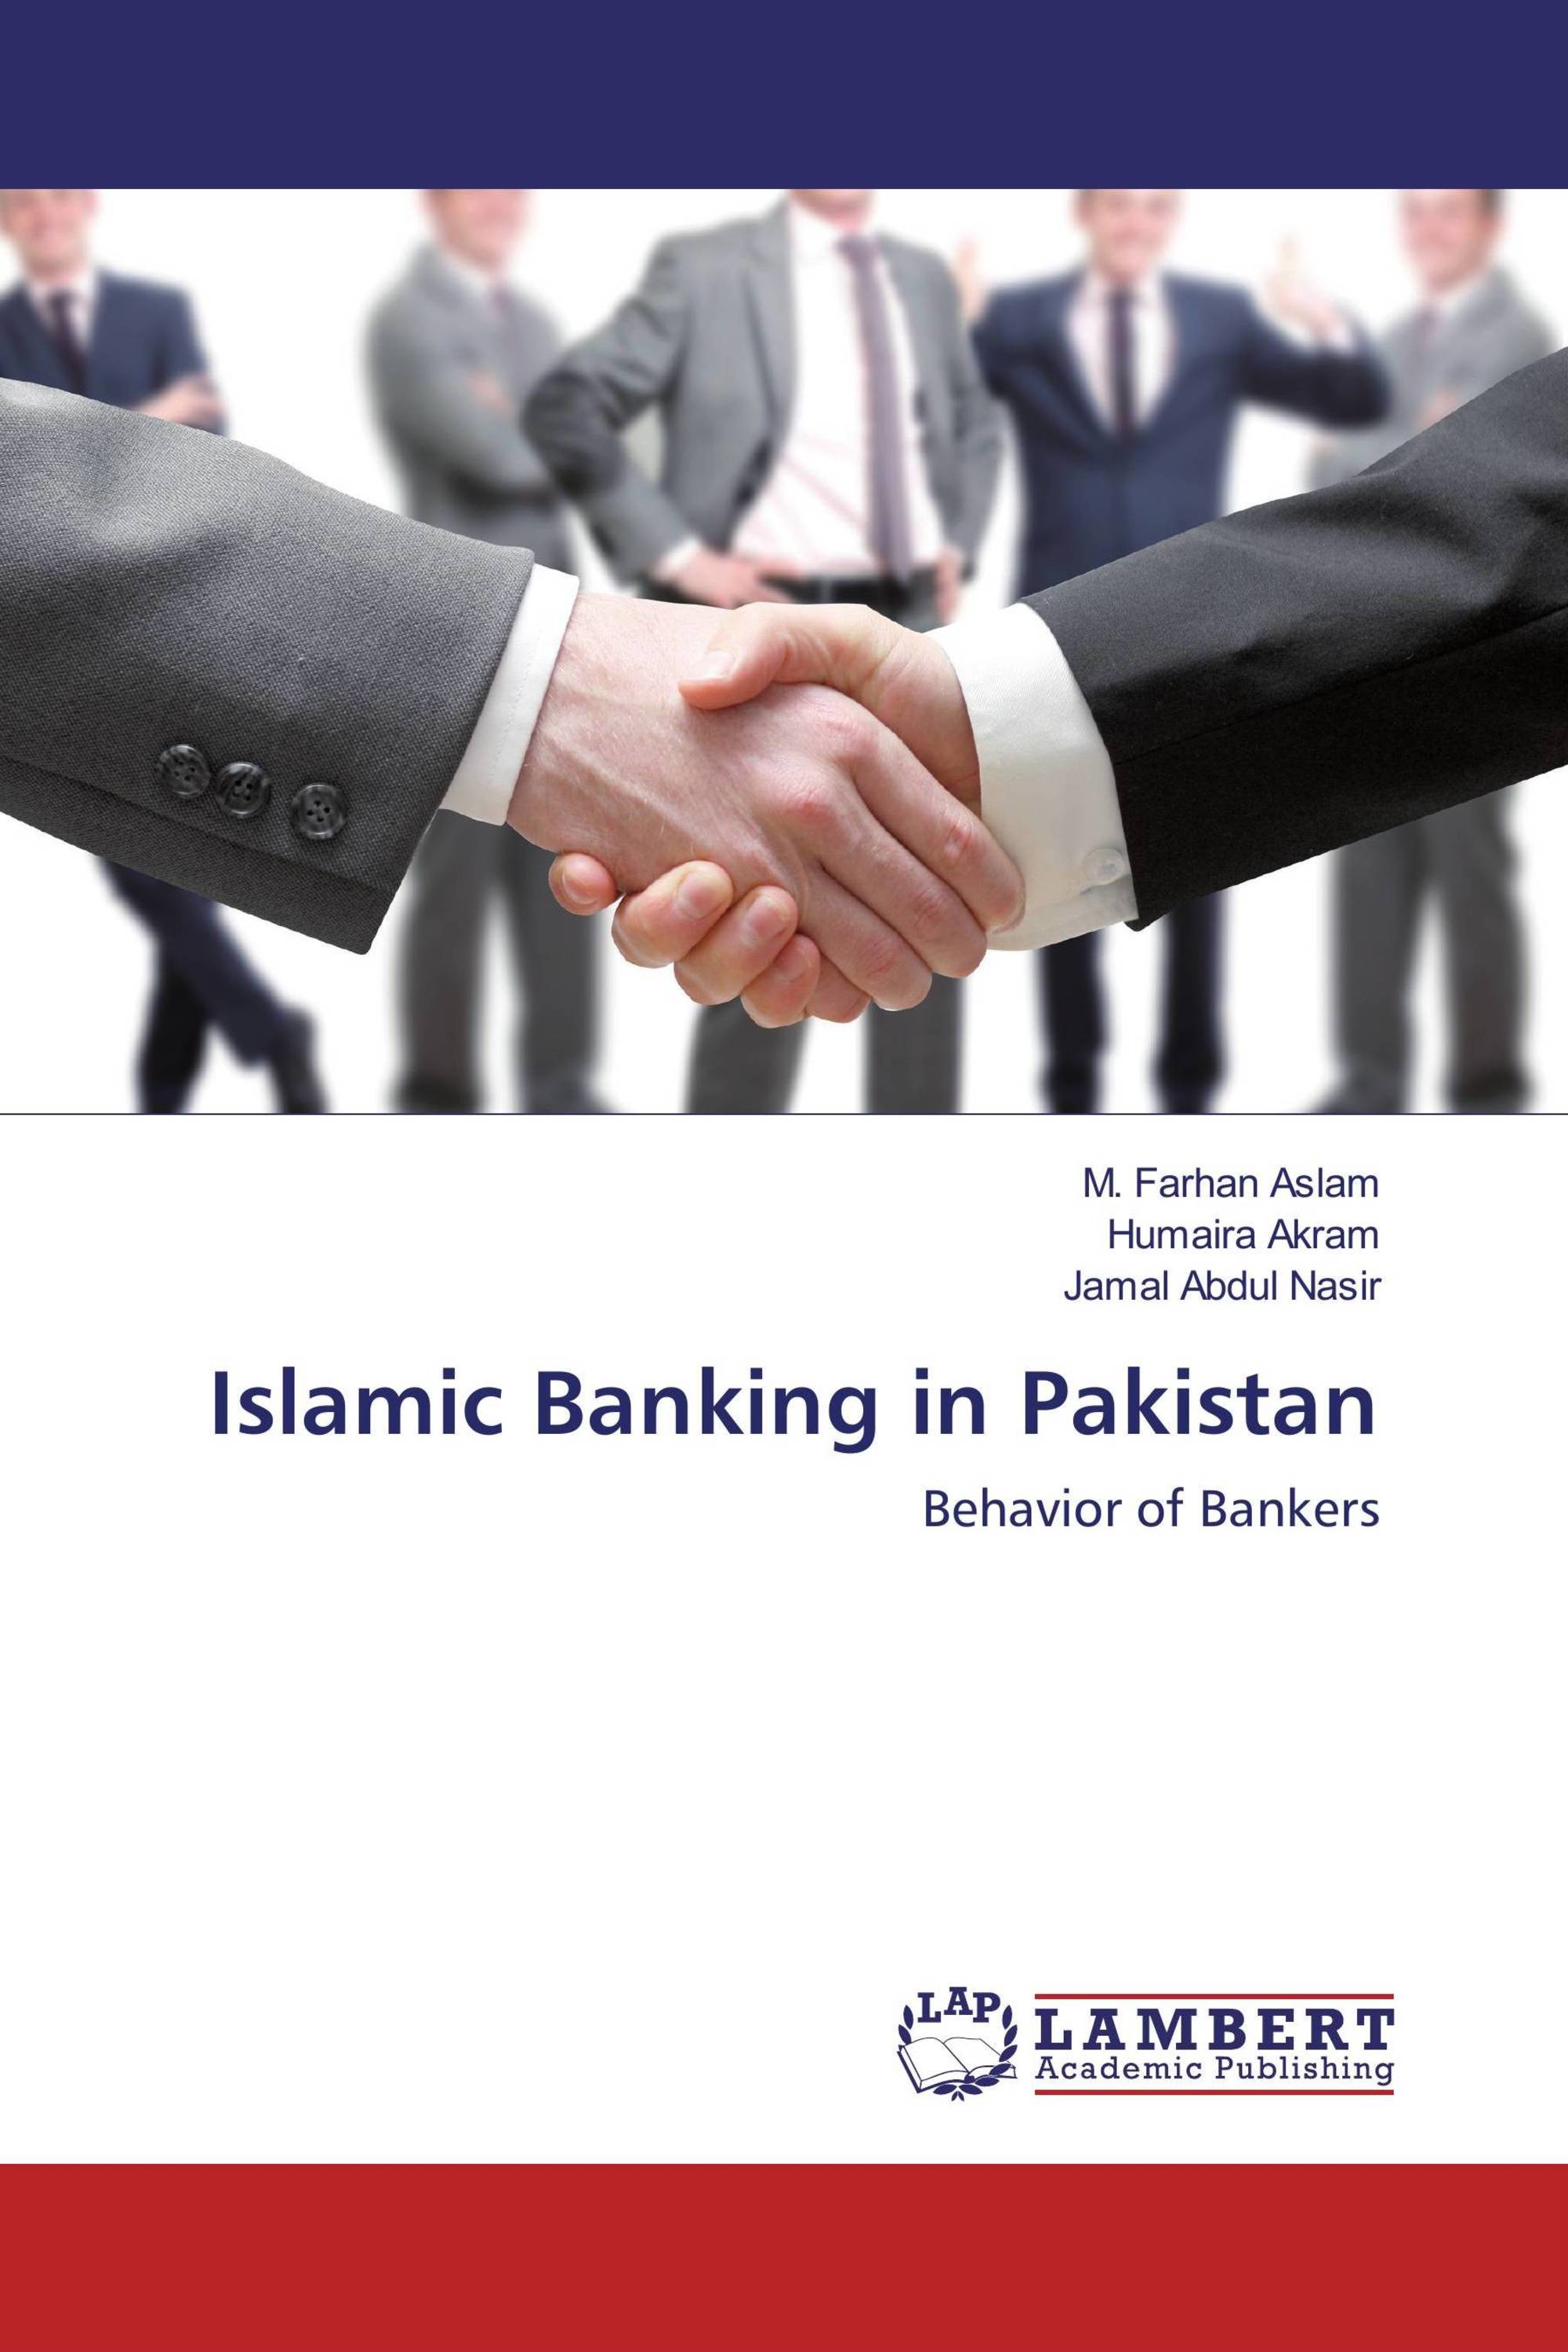 research on islamic banking in pakistan